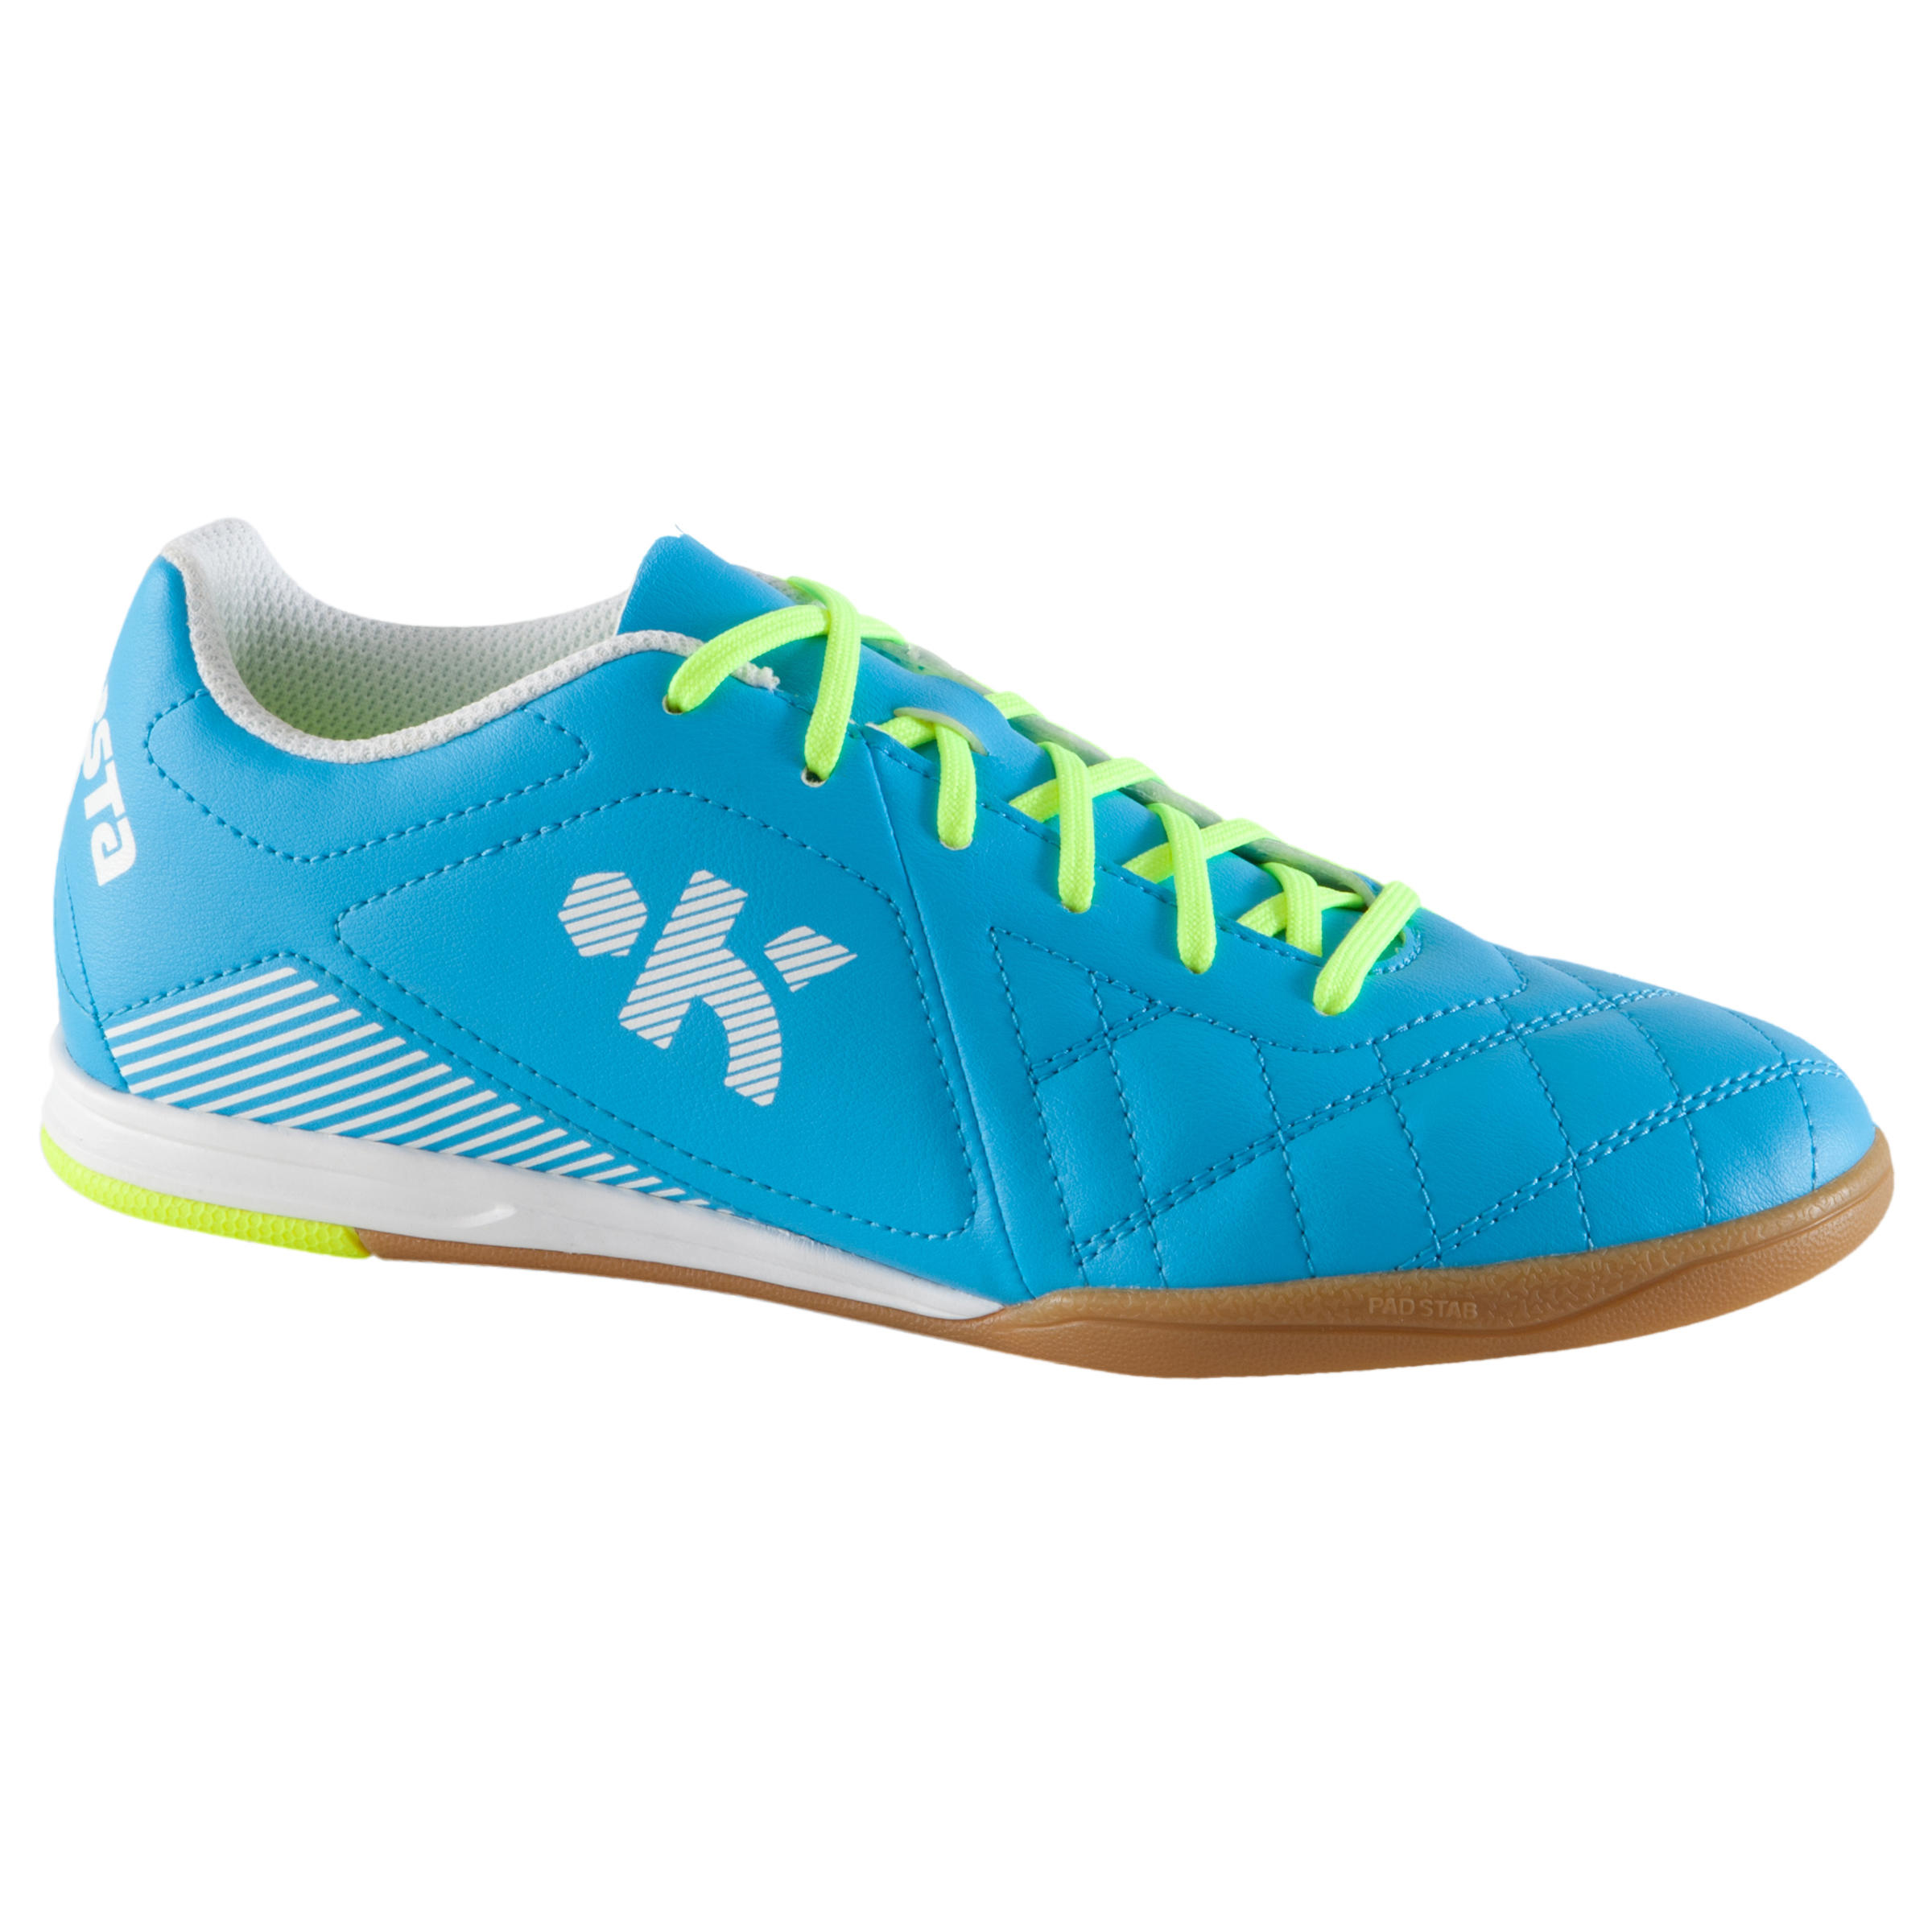 KIPSTA Agility 500 Kids Futsal Trainers - Blue/Yellow